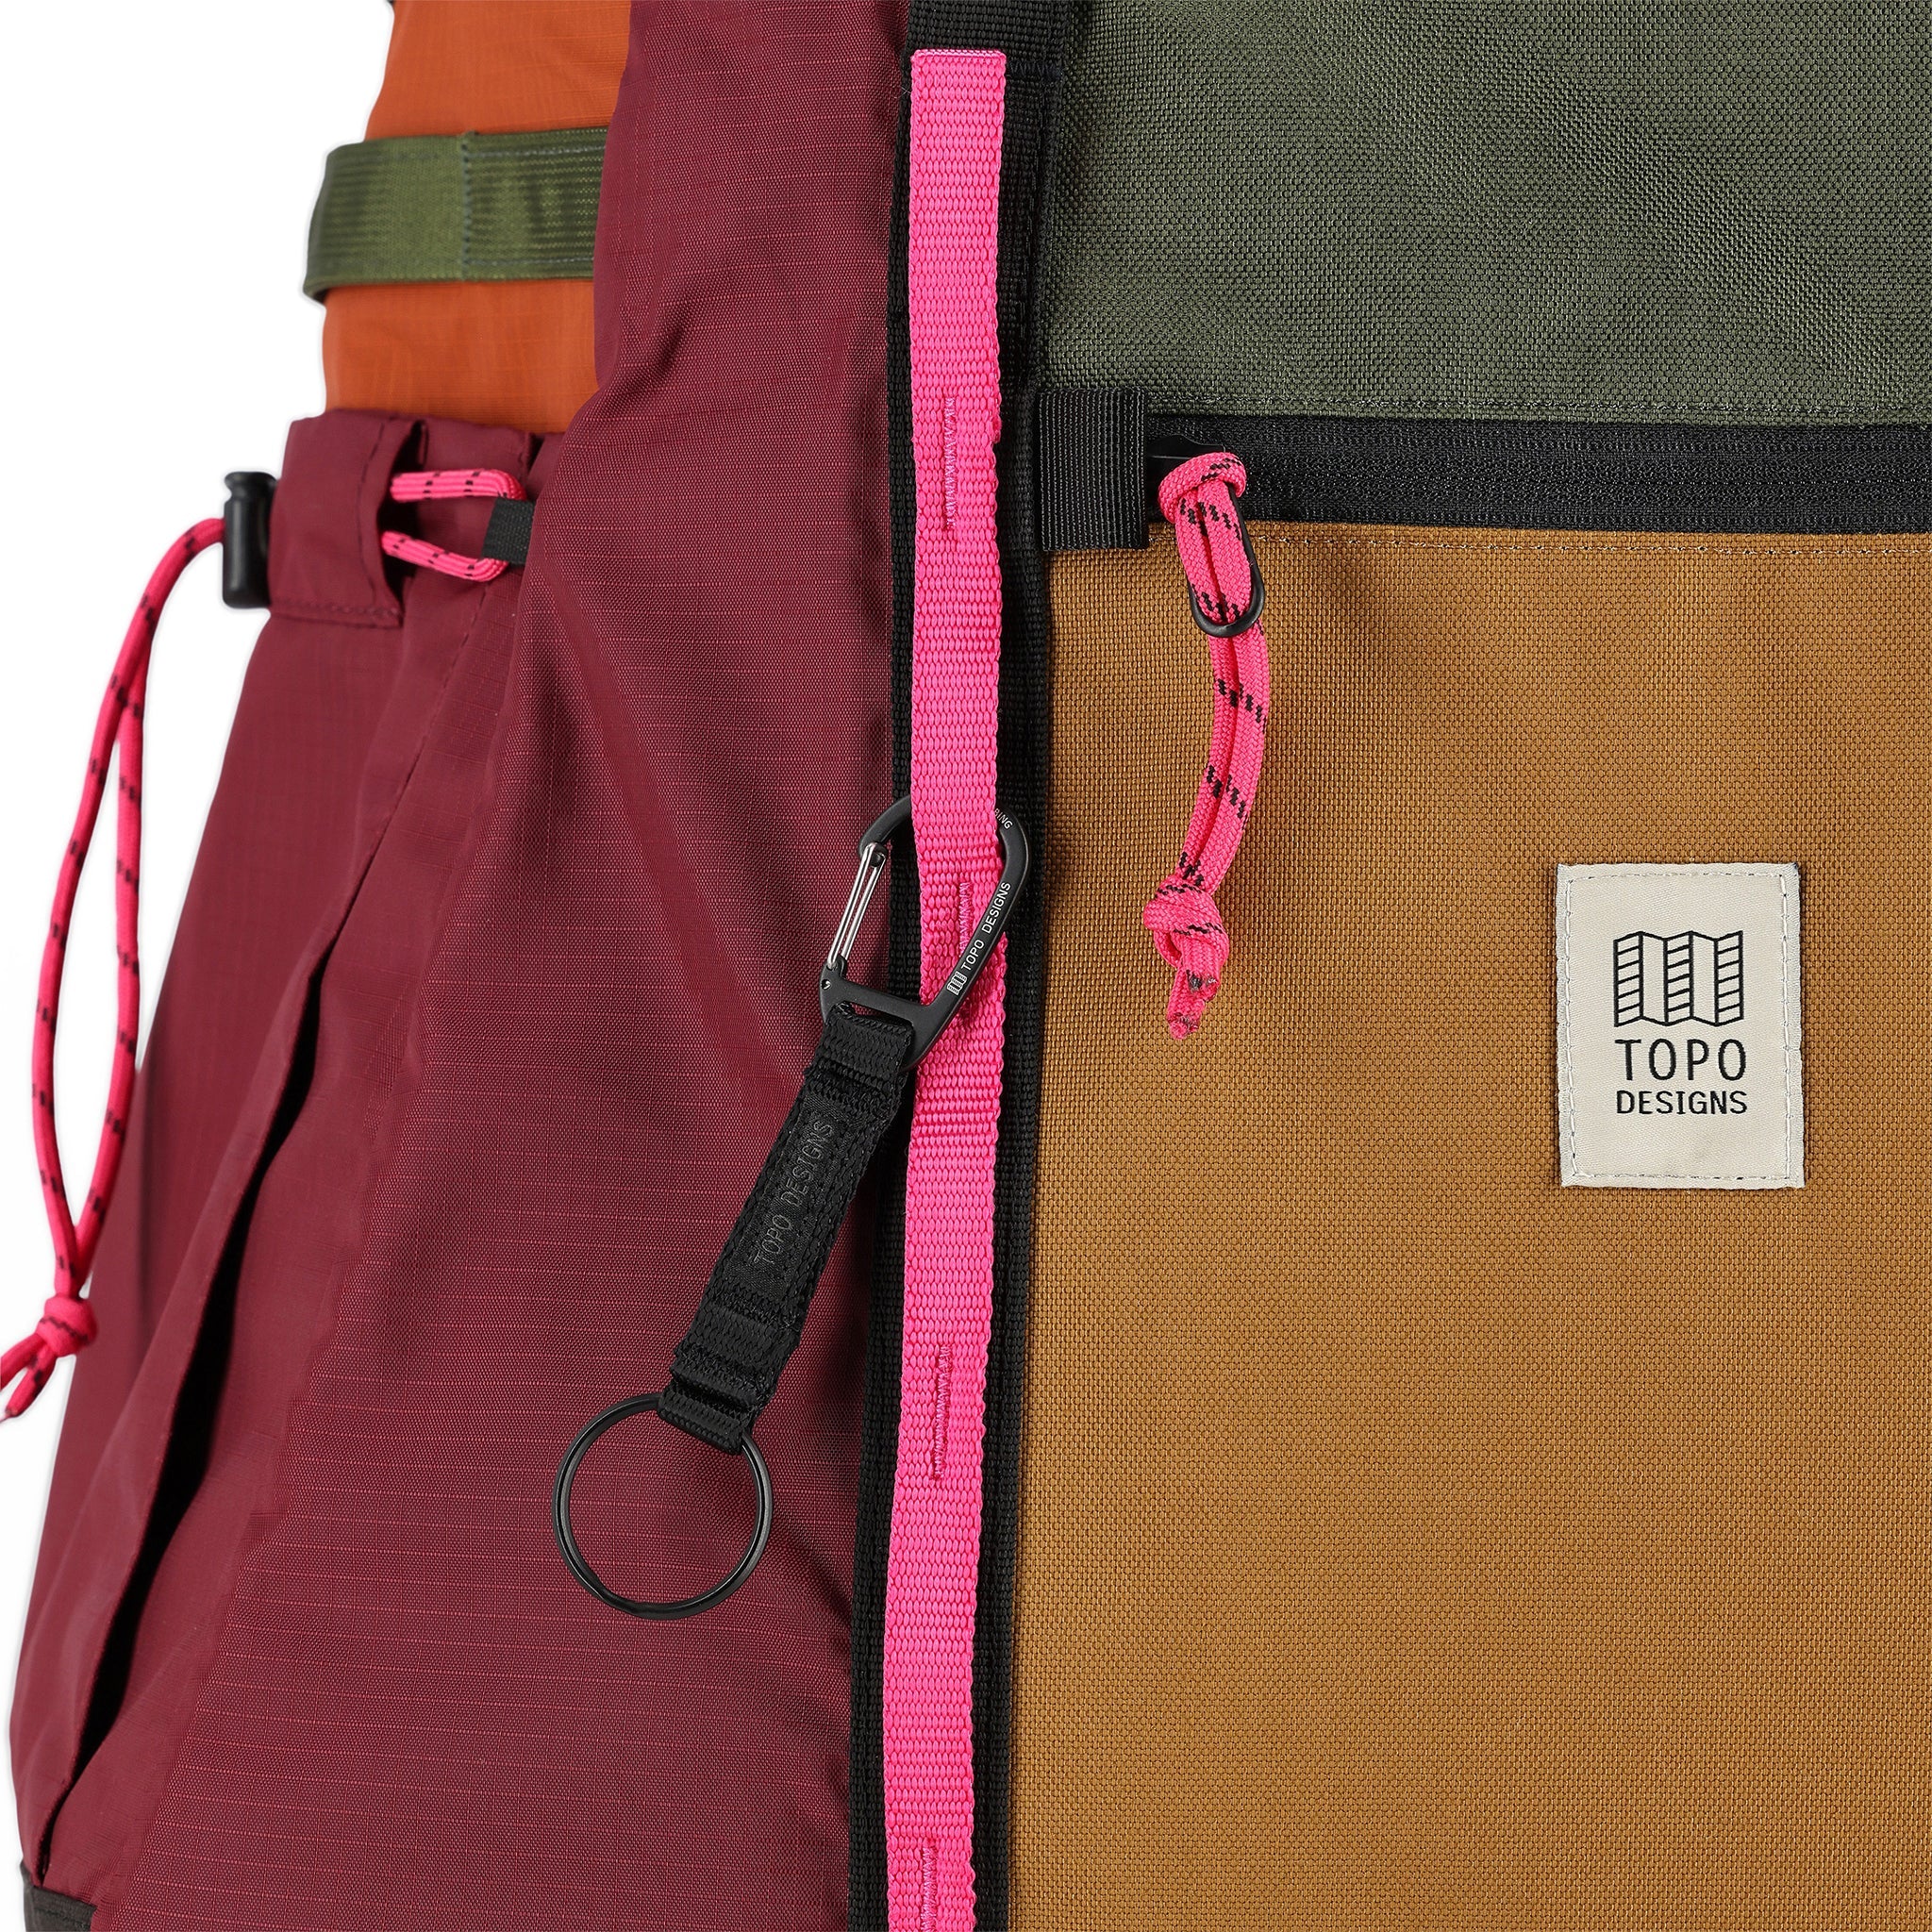 Close up front shot of Topo Designs Mountain Gear Bag tote hauler in lightweight recycled "Bdurgundy / Dark Khaki" nylon.